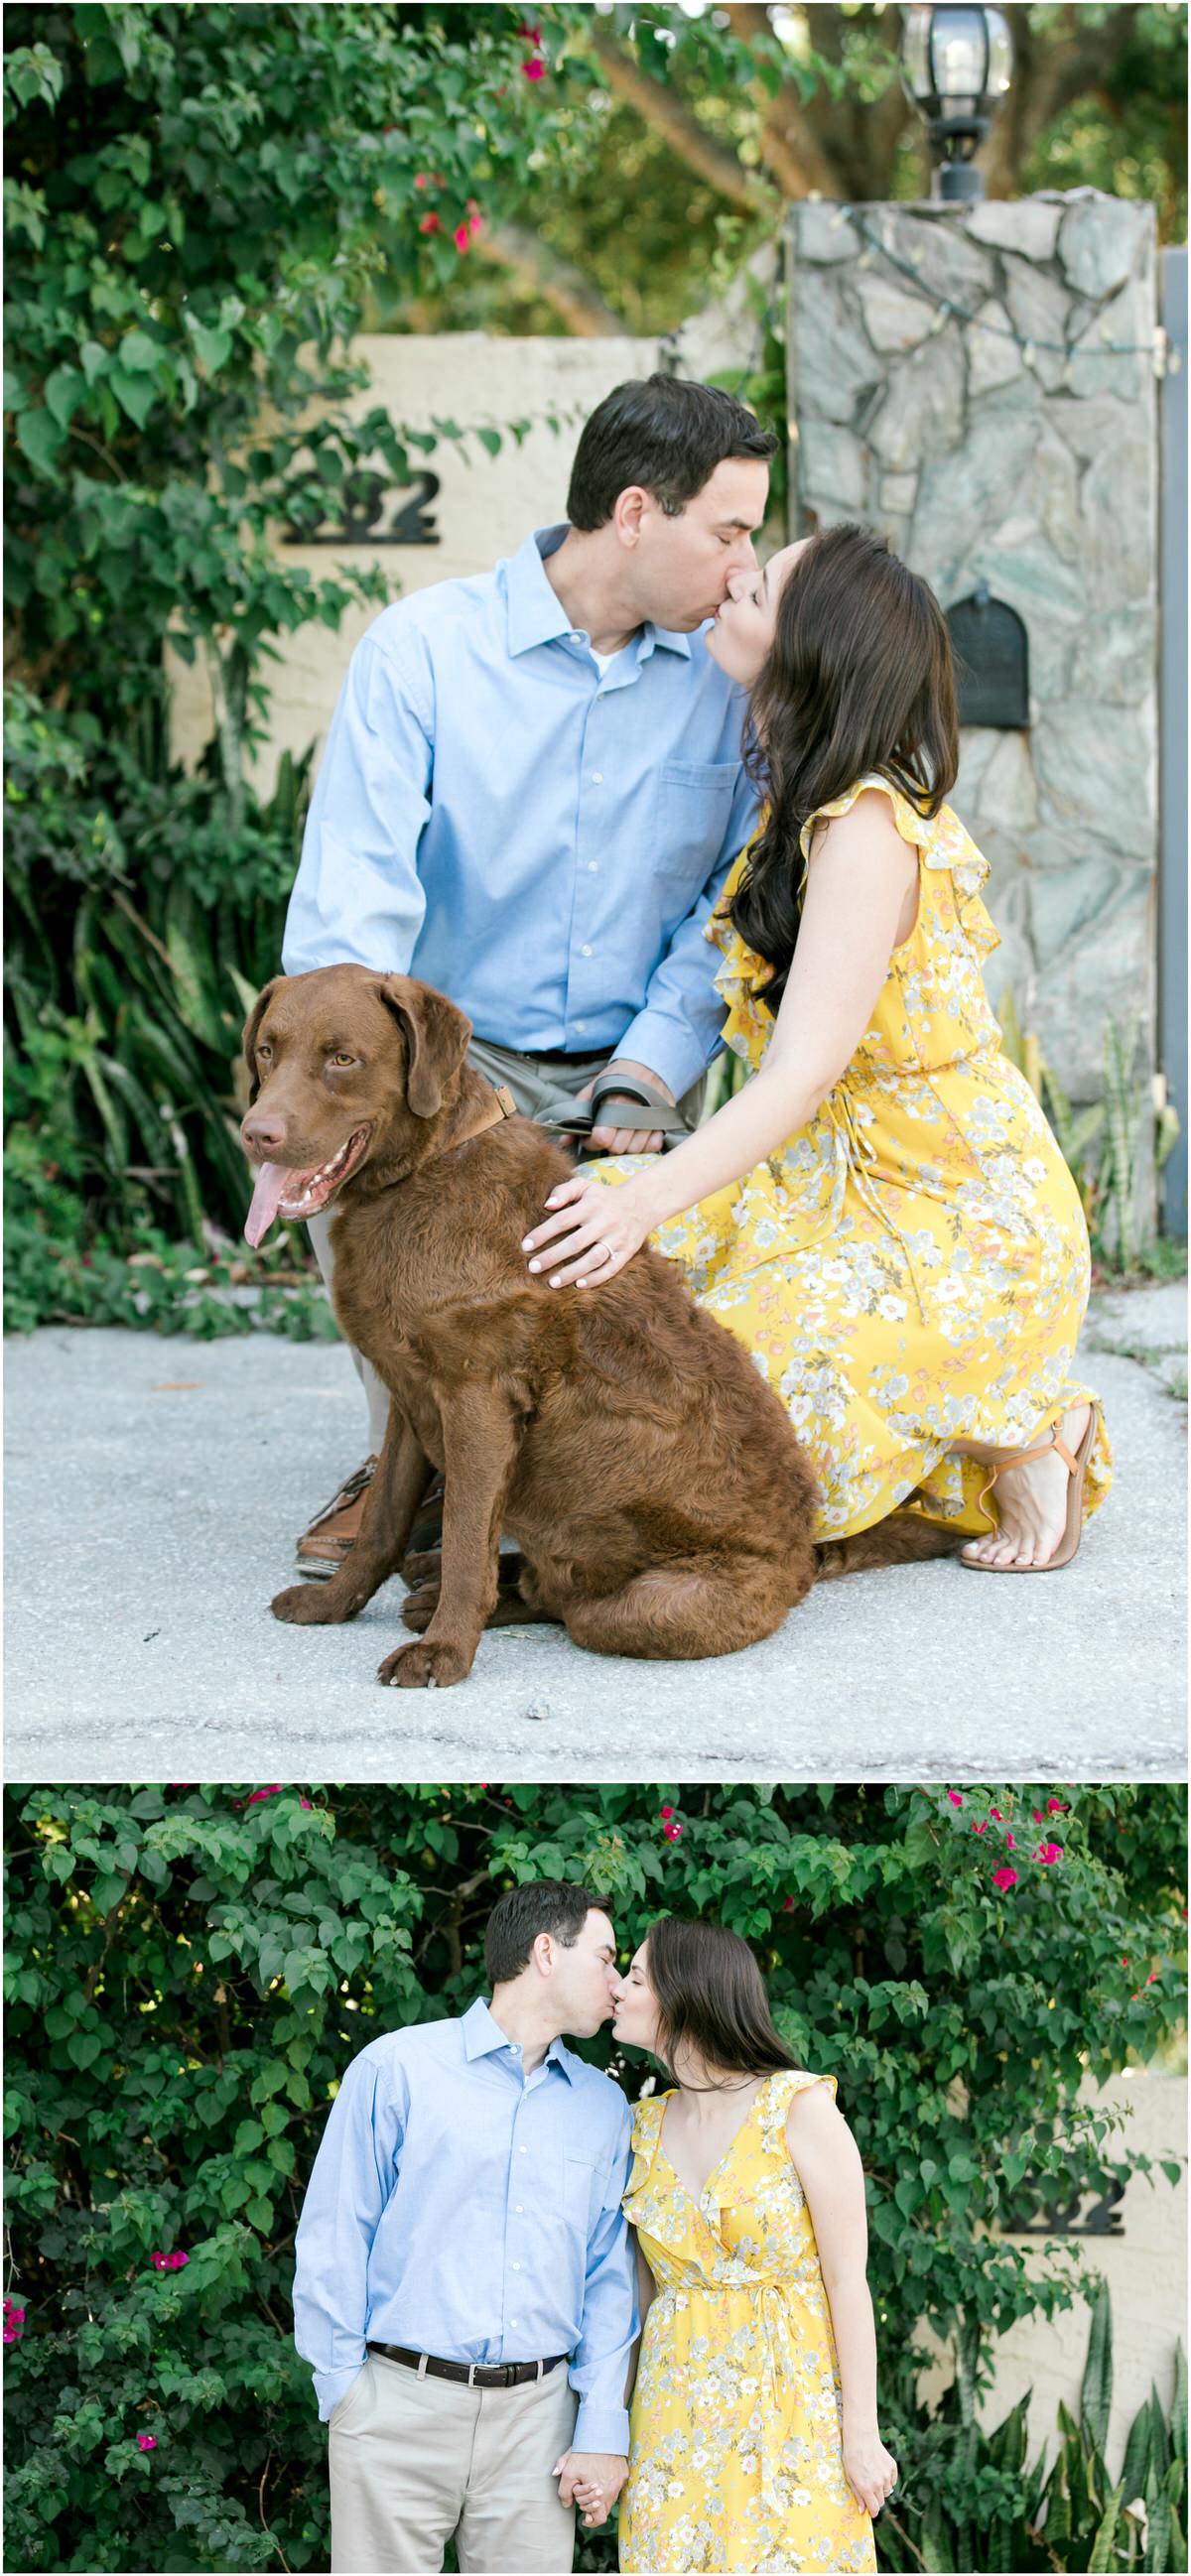 Engaged couple outside with dog